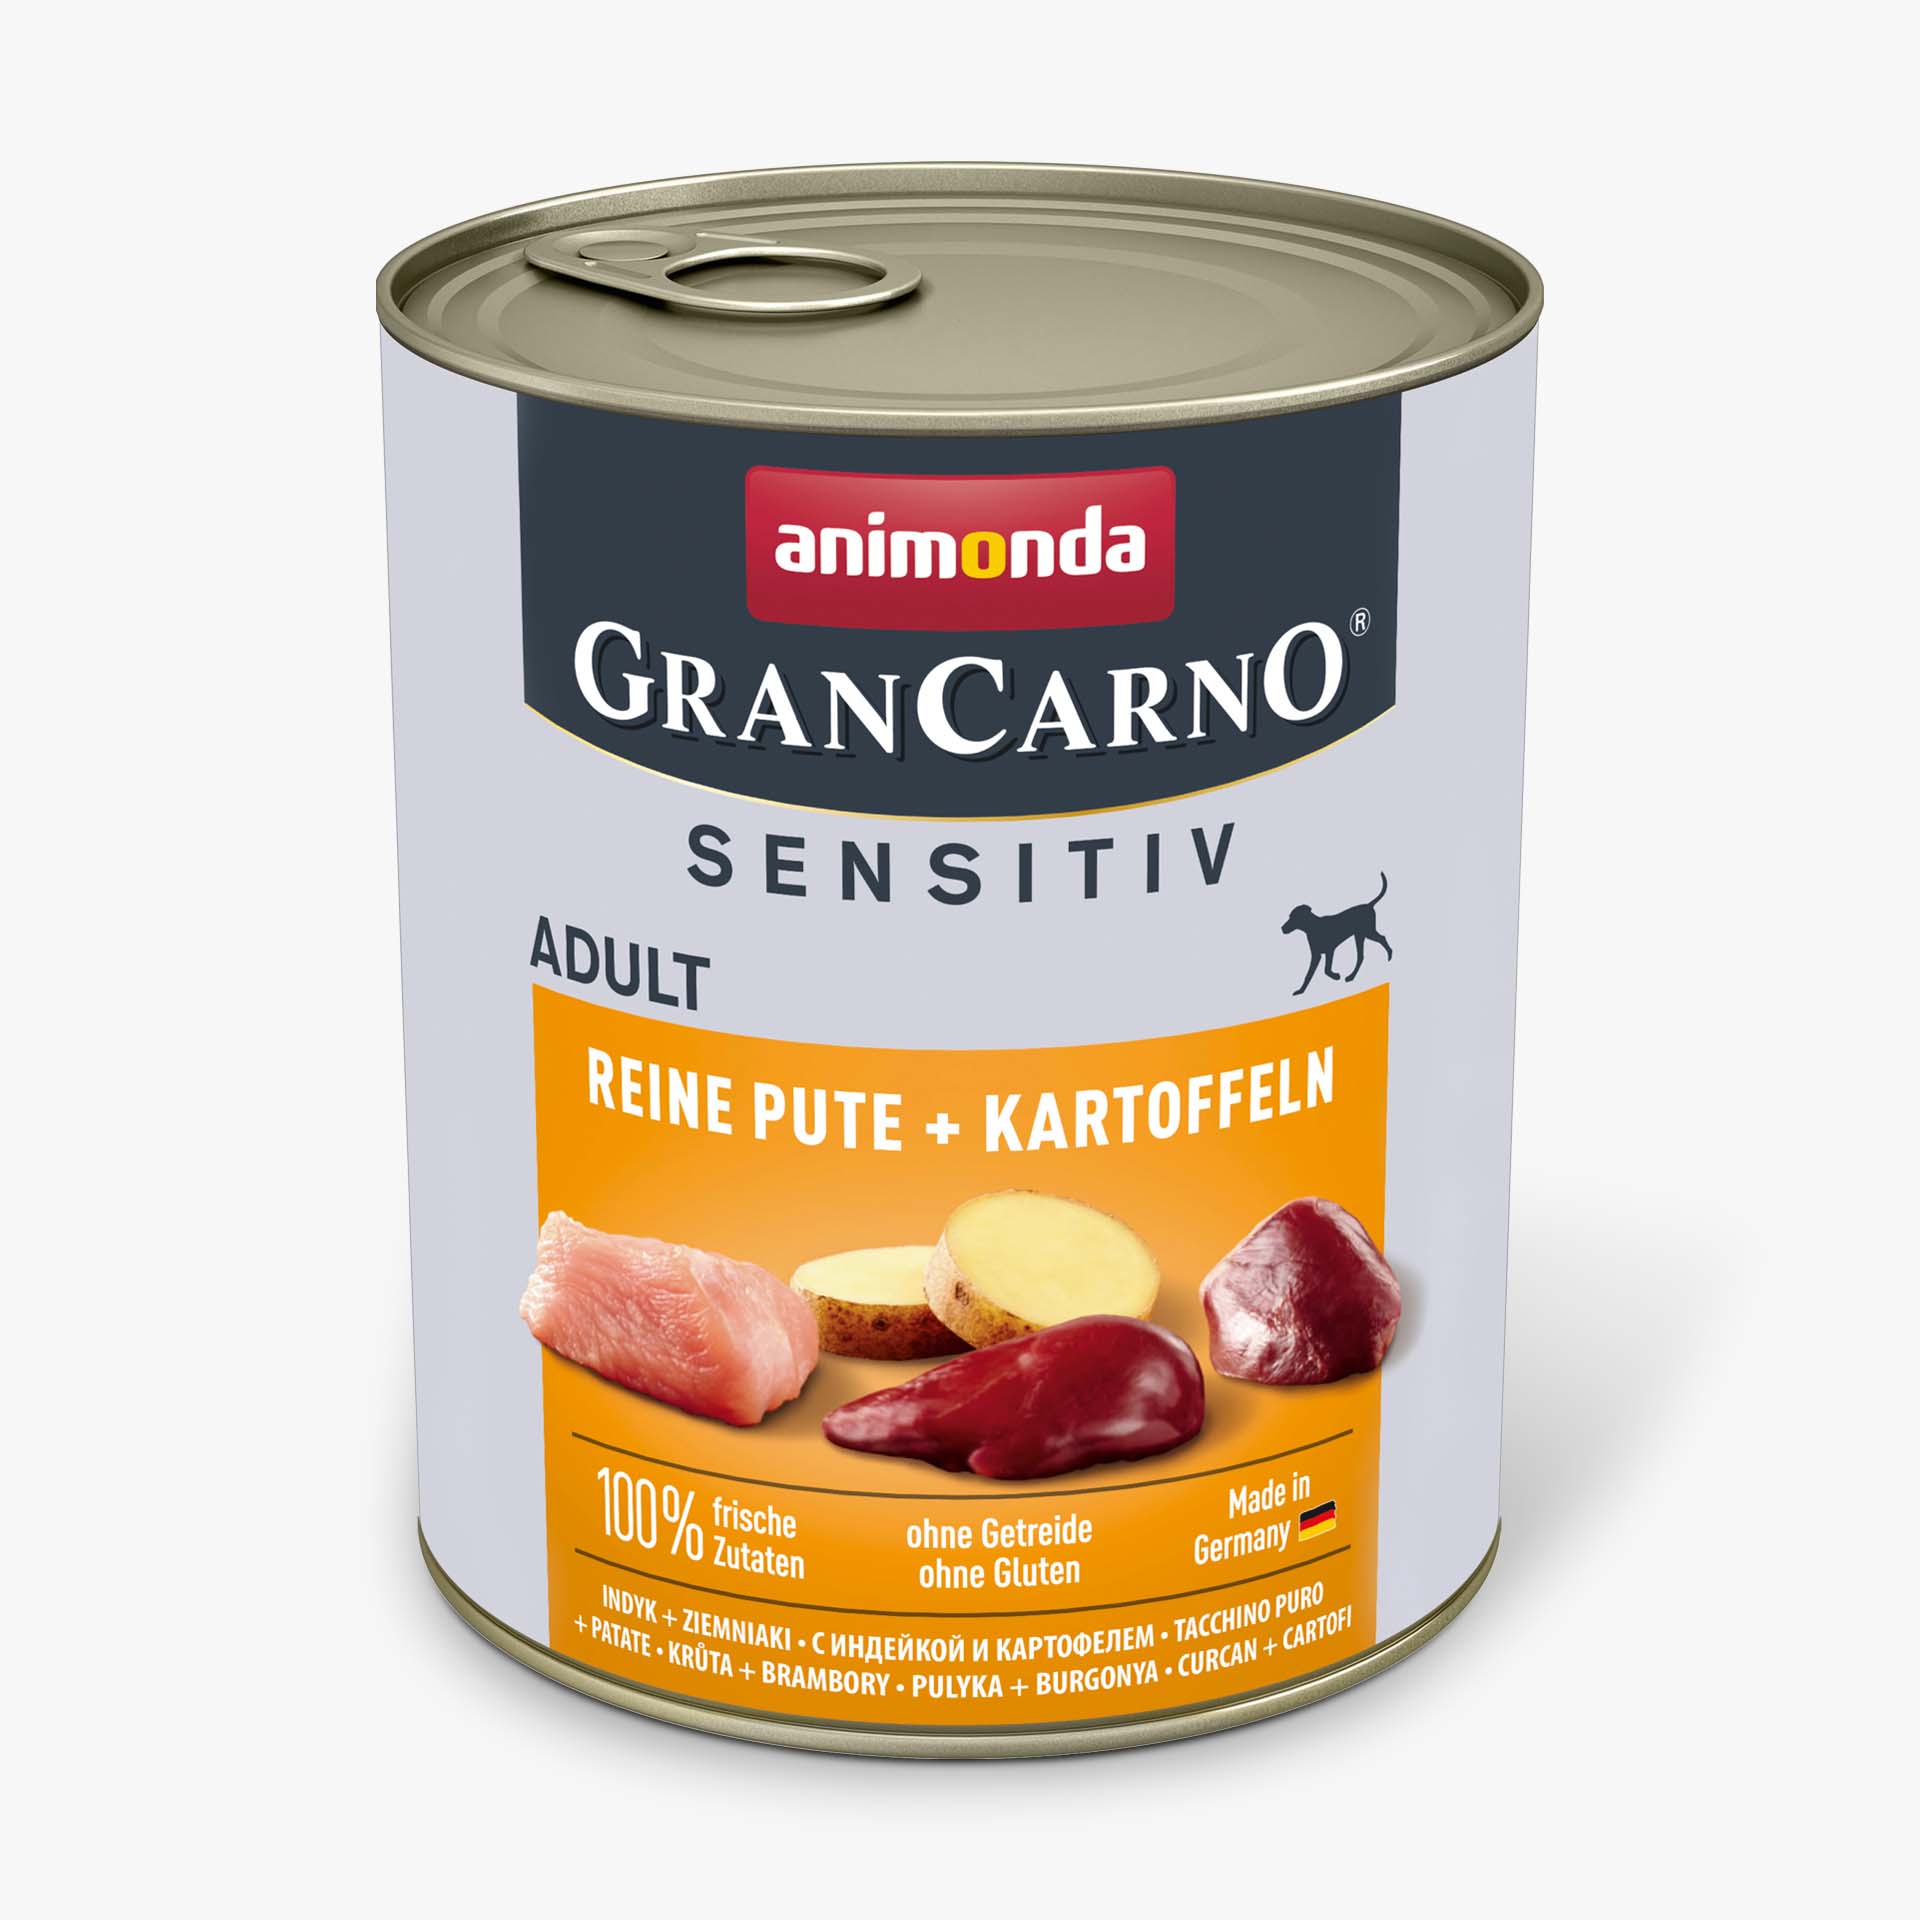 GranCarno pure turkey + potatoes Sensitiv